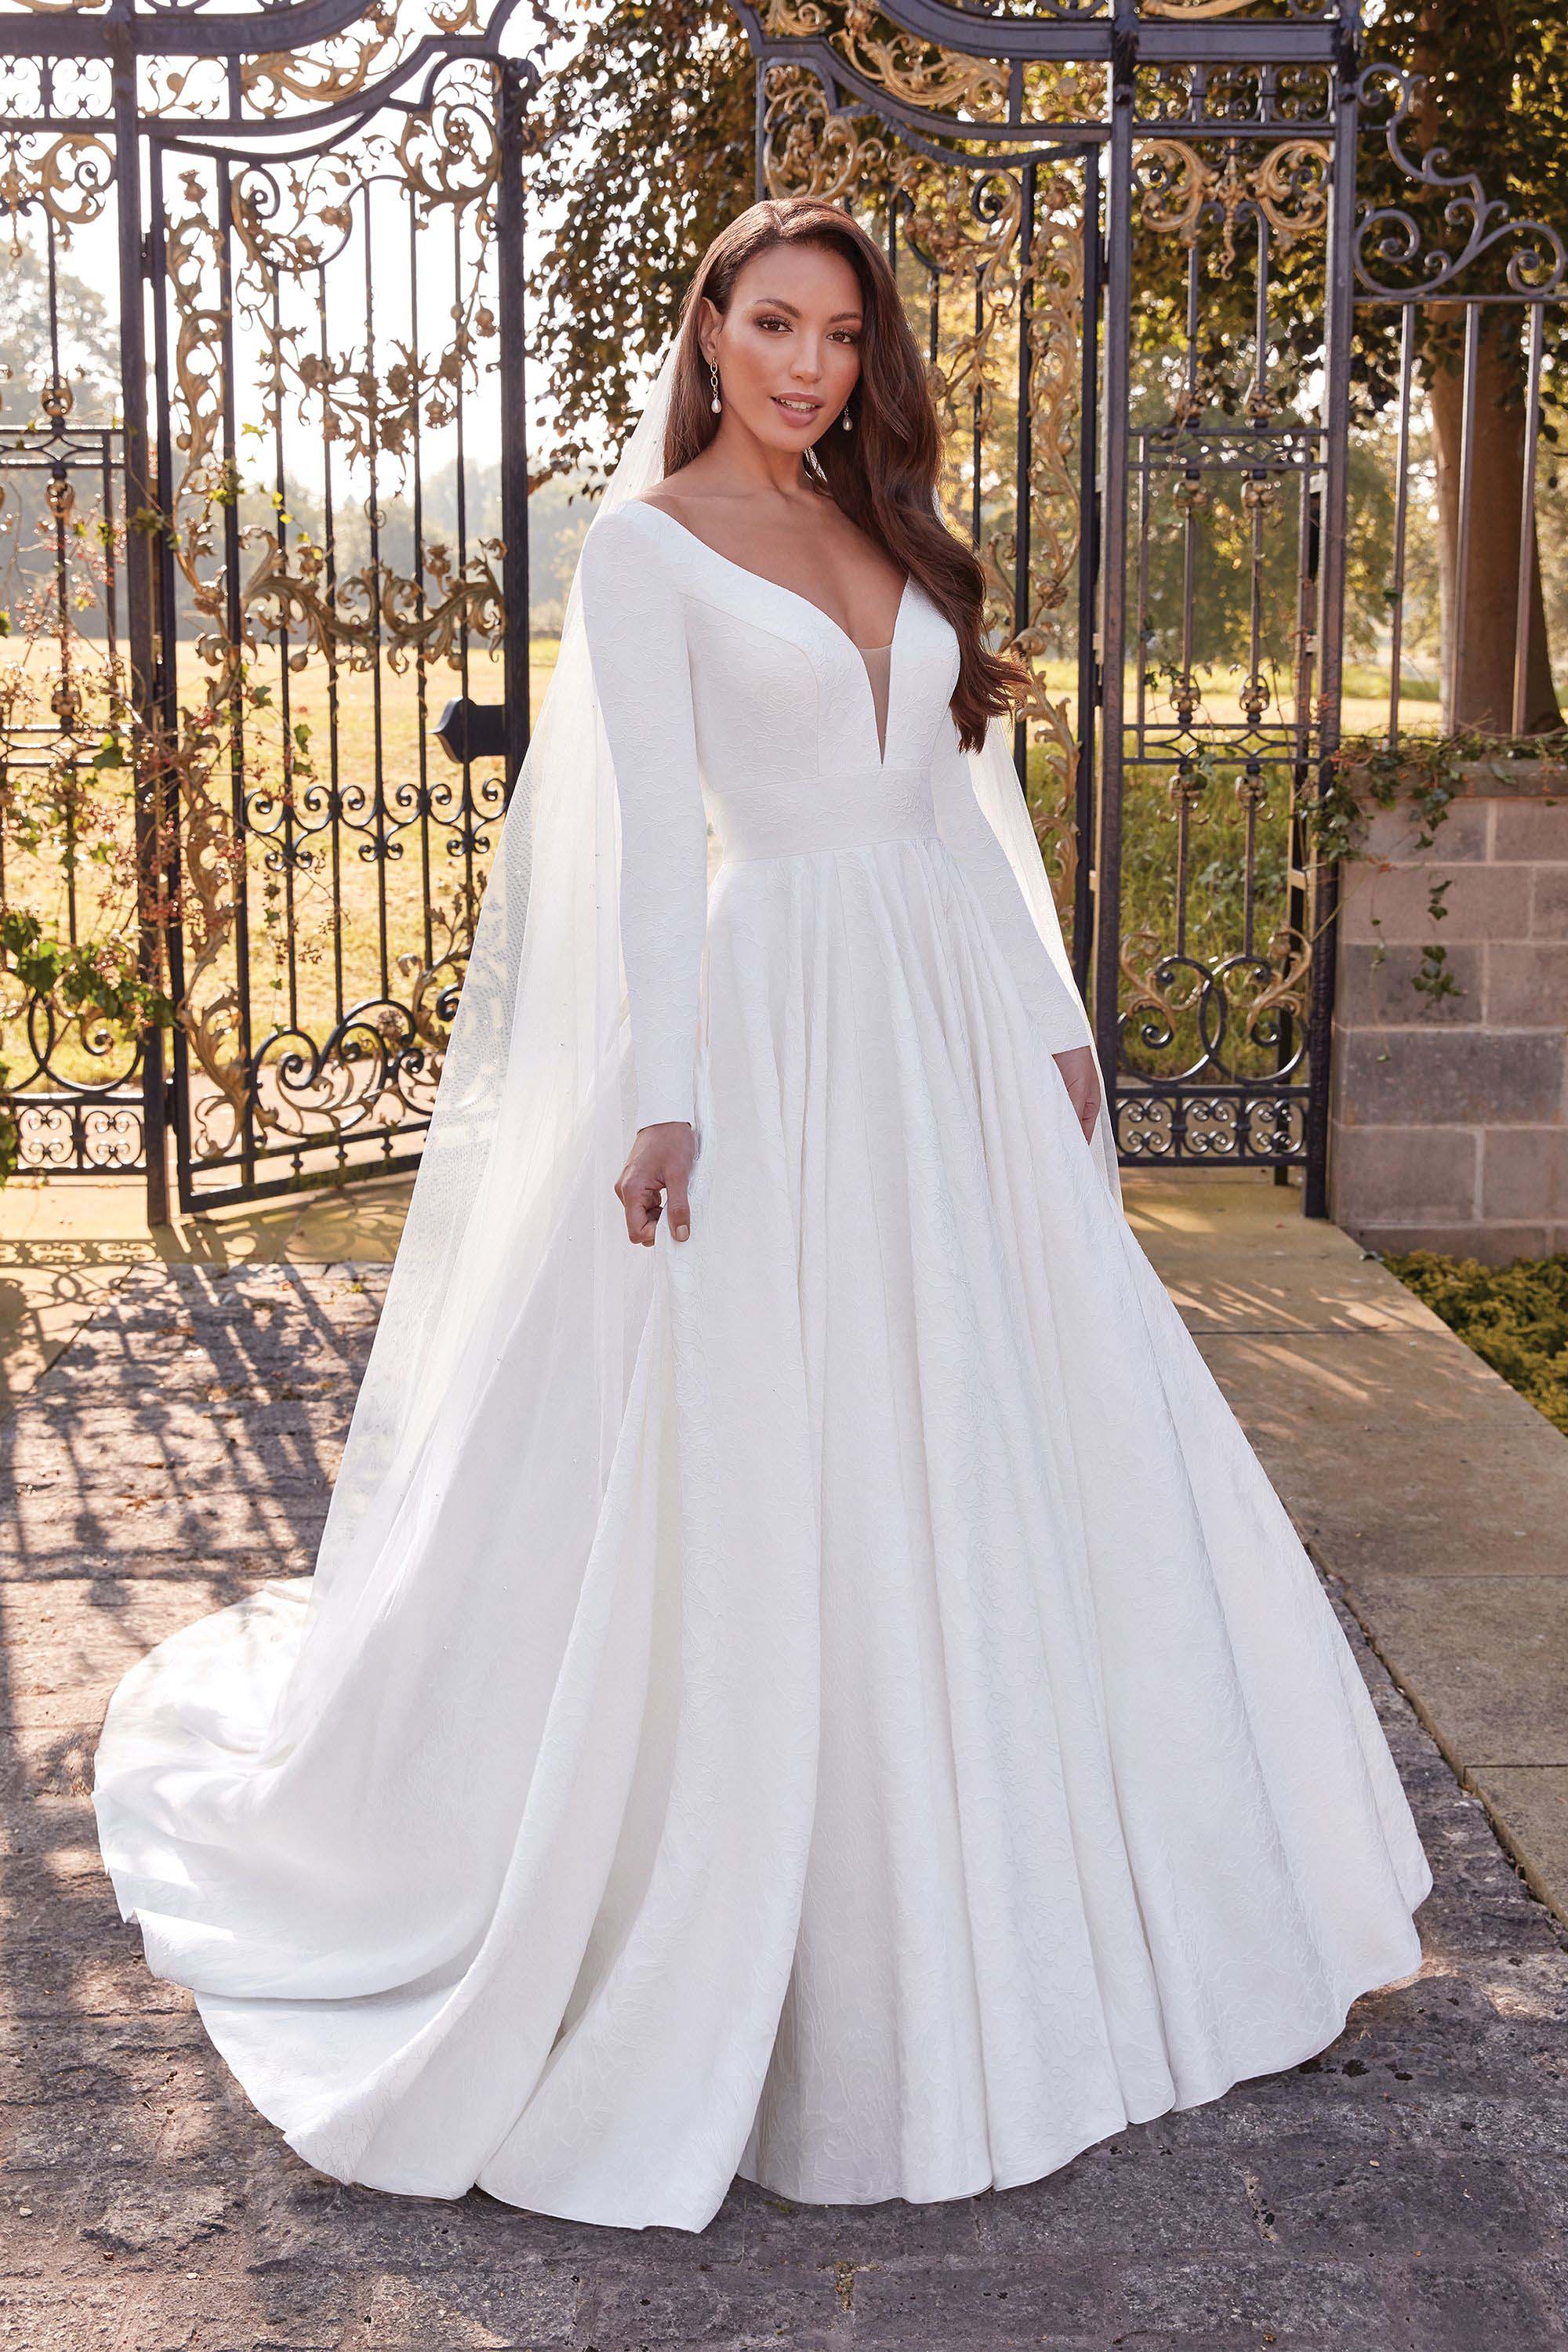 Strapless Sweetheart Neckline with Collar Box Pleat Skirt Wedding Dresses  Online #1273 Sizing Sample